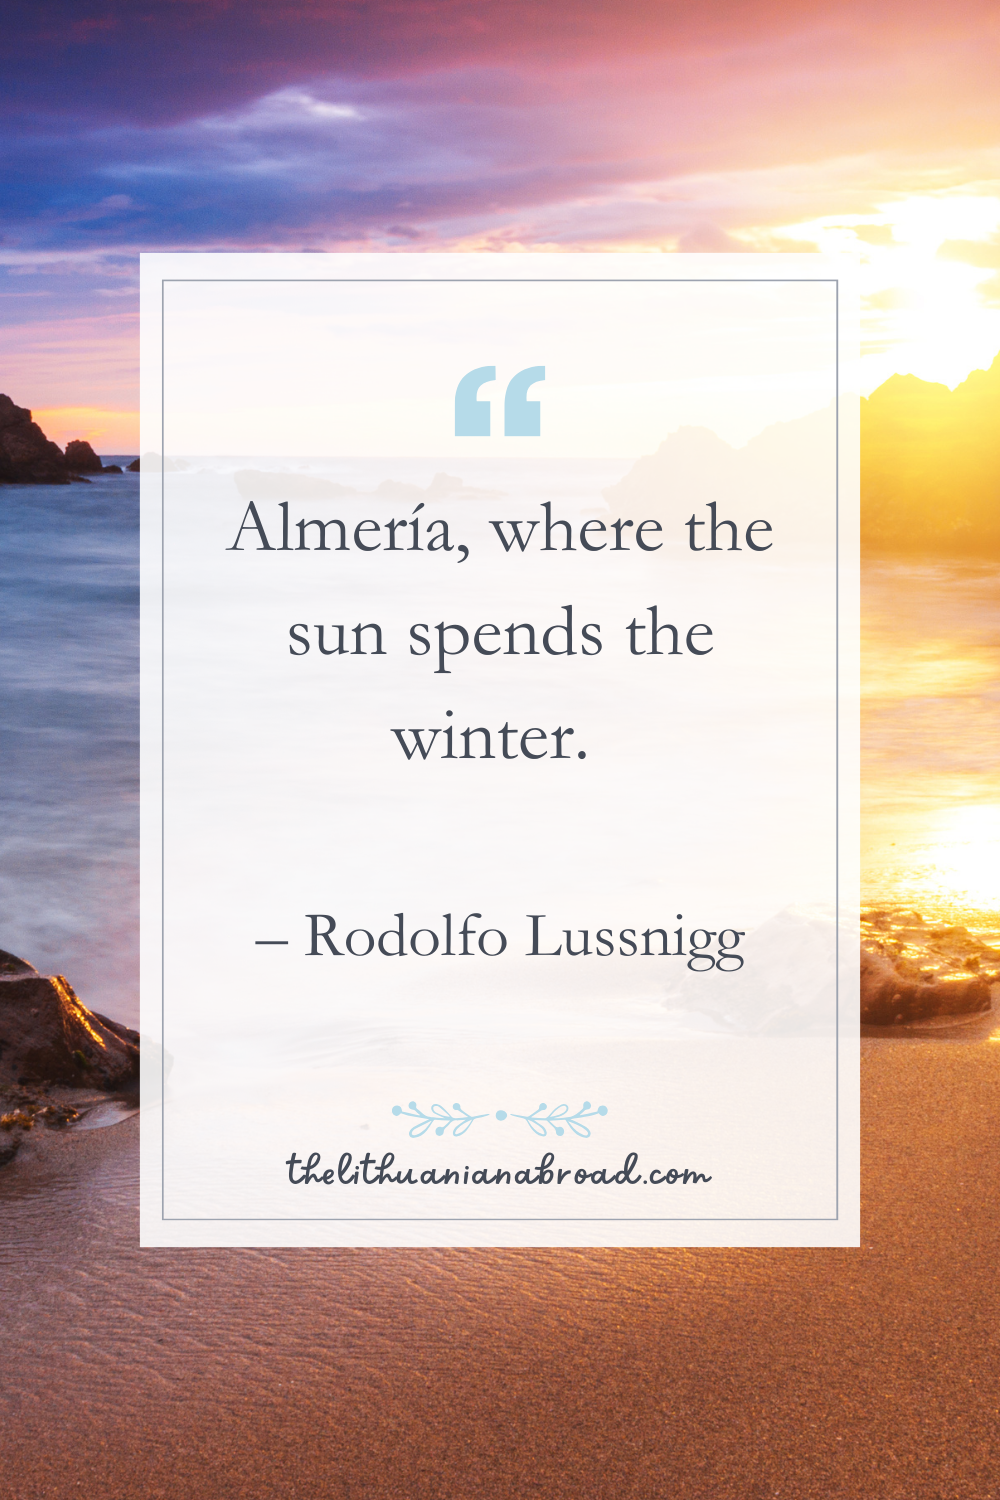 Spain Instagram captions Almeria sun spends winter